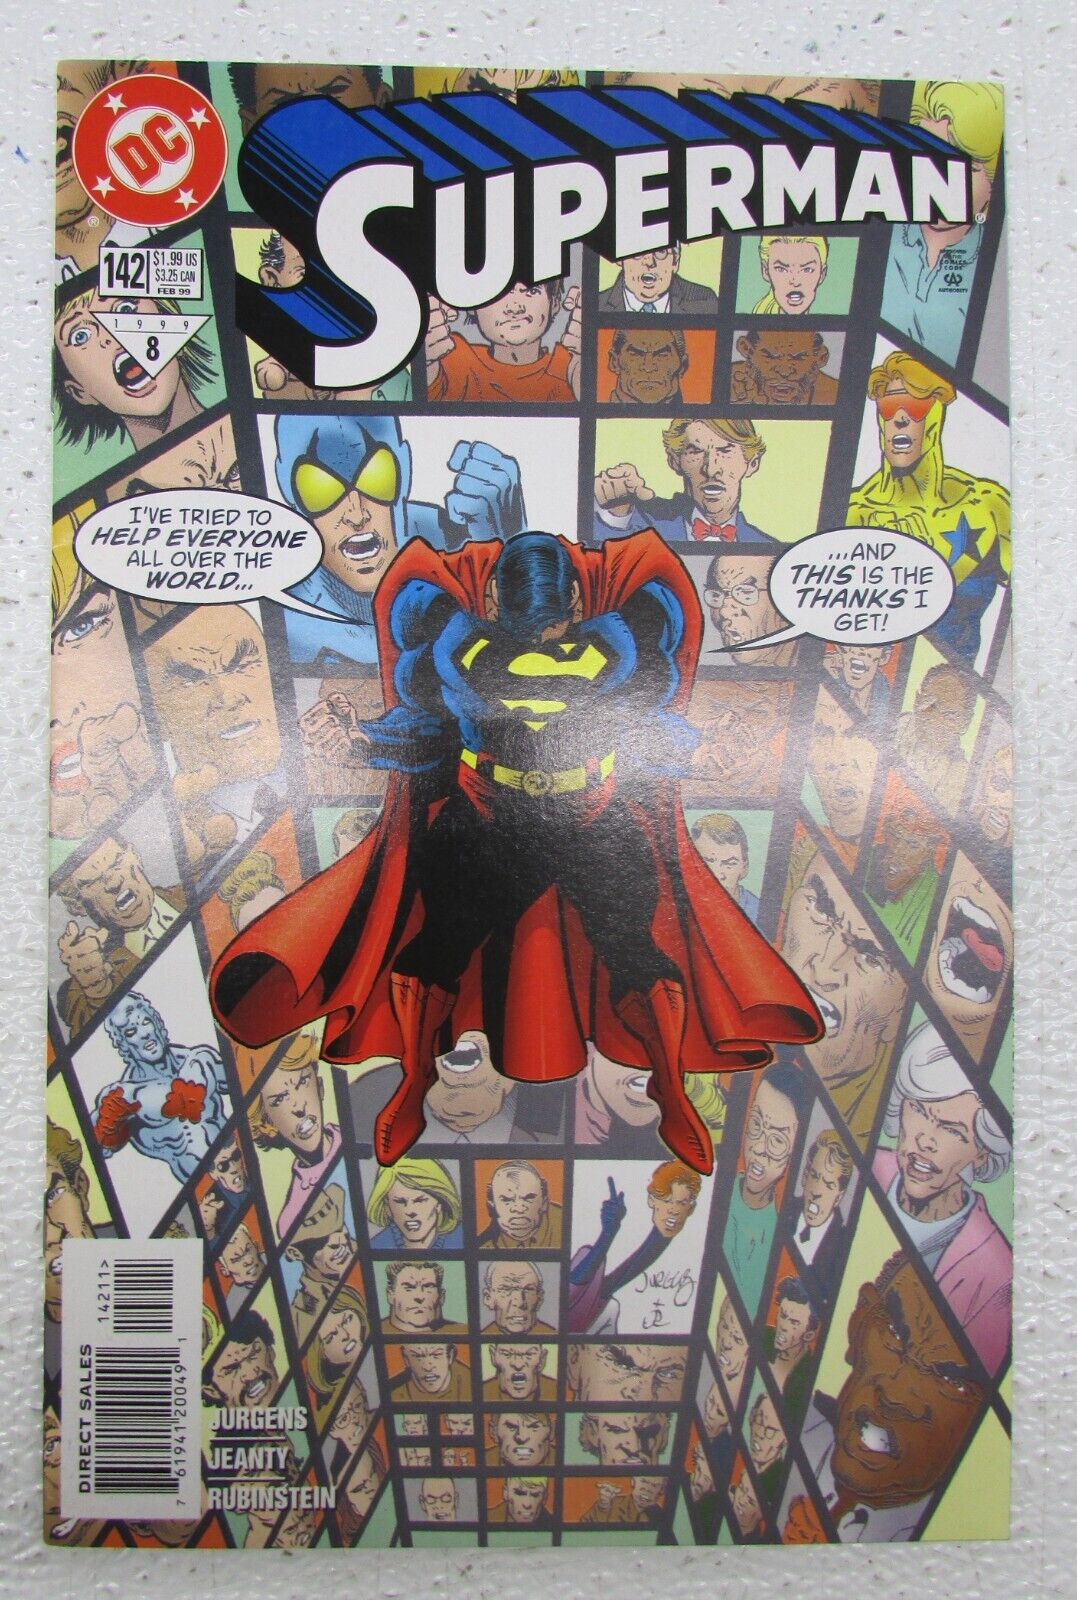 DC COMIC BOOK SUPERMAN #142 FEB 1999